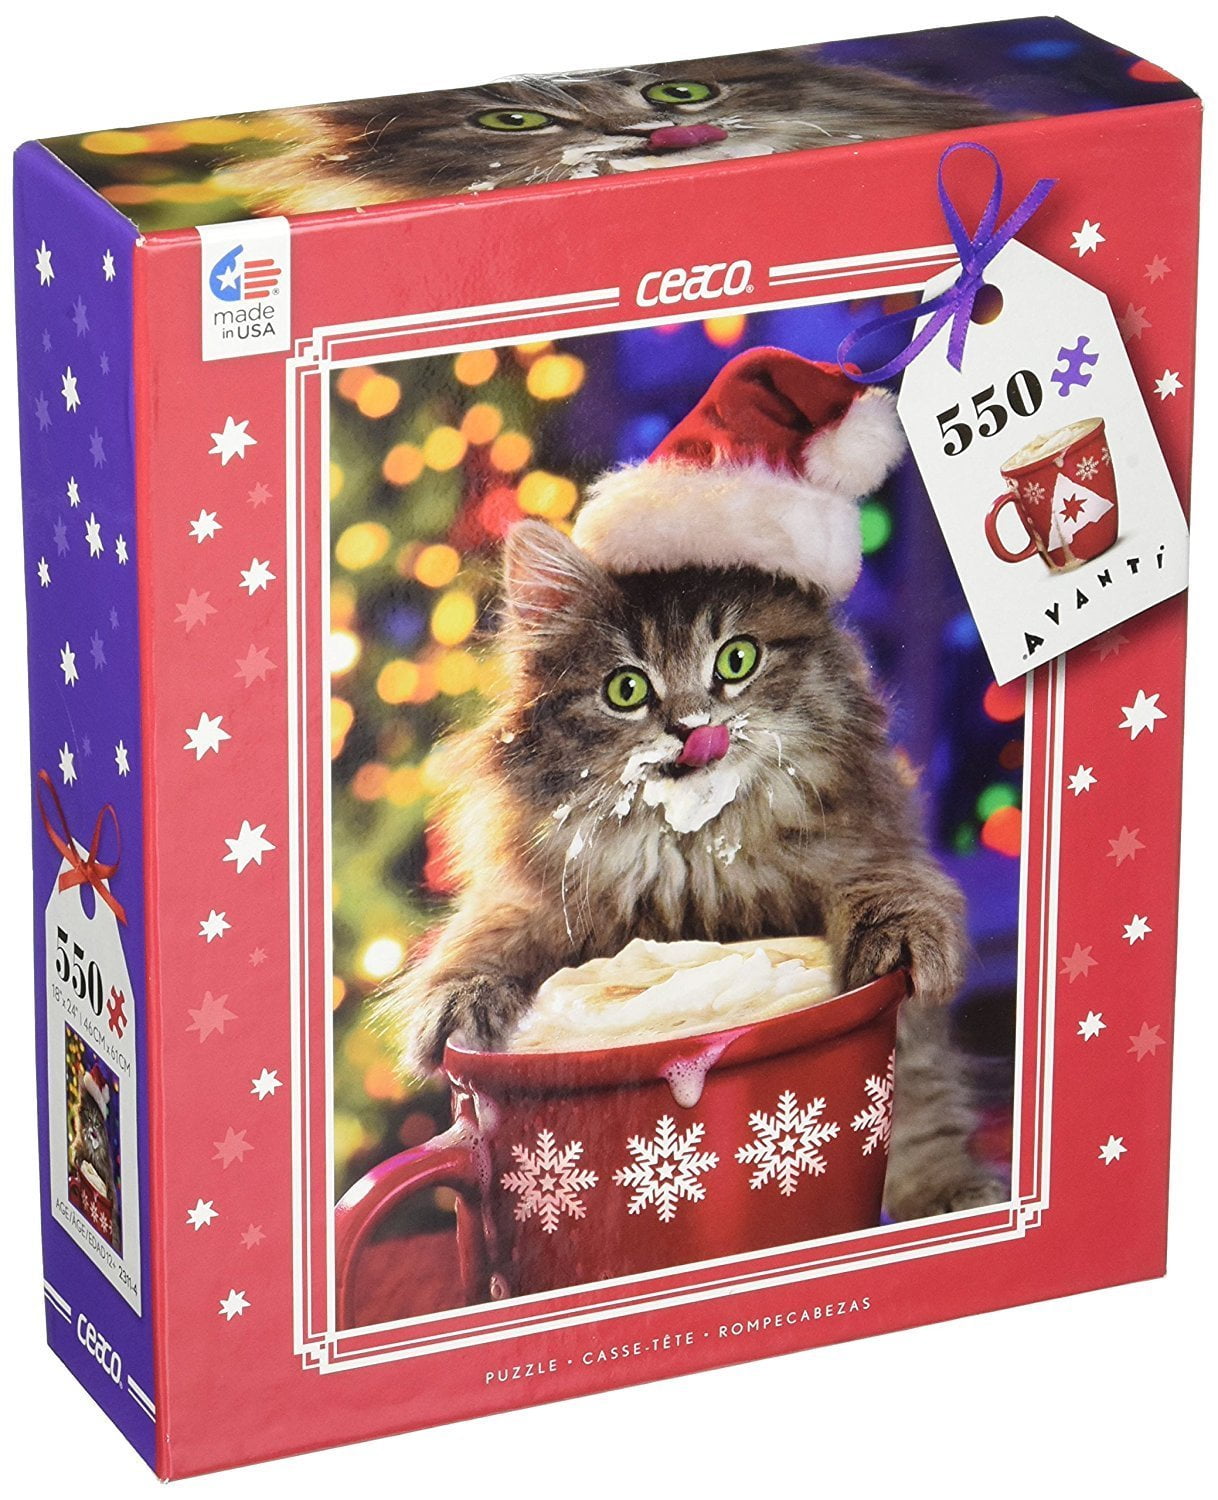 Ceaco Avanti Jigsaw Puzzle of Cat Drinking Santa's Hot Chocolate; 550 pc 18x24 